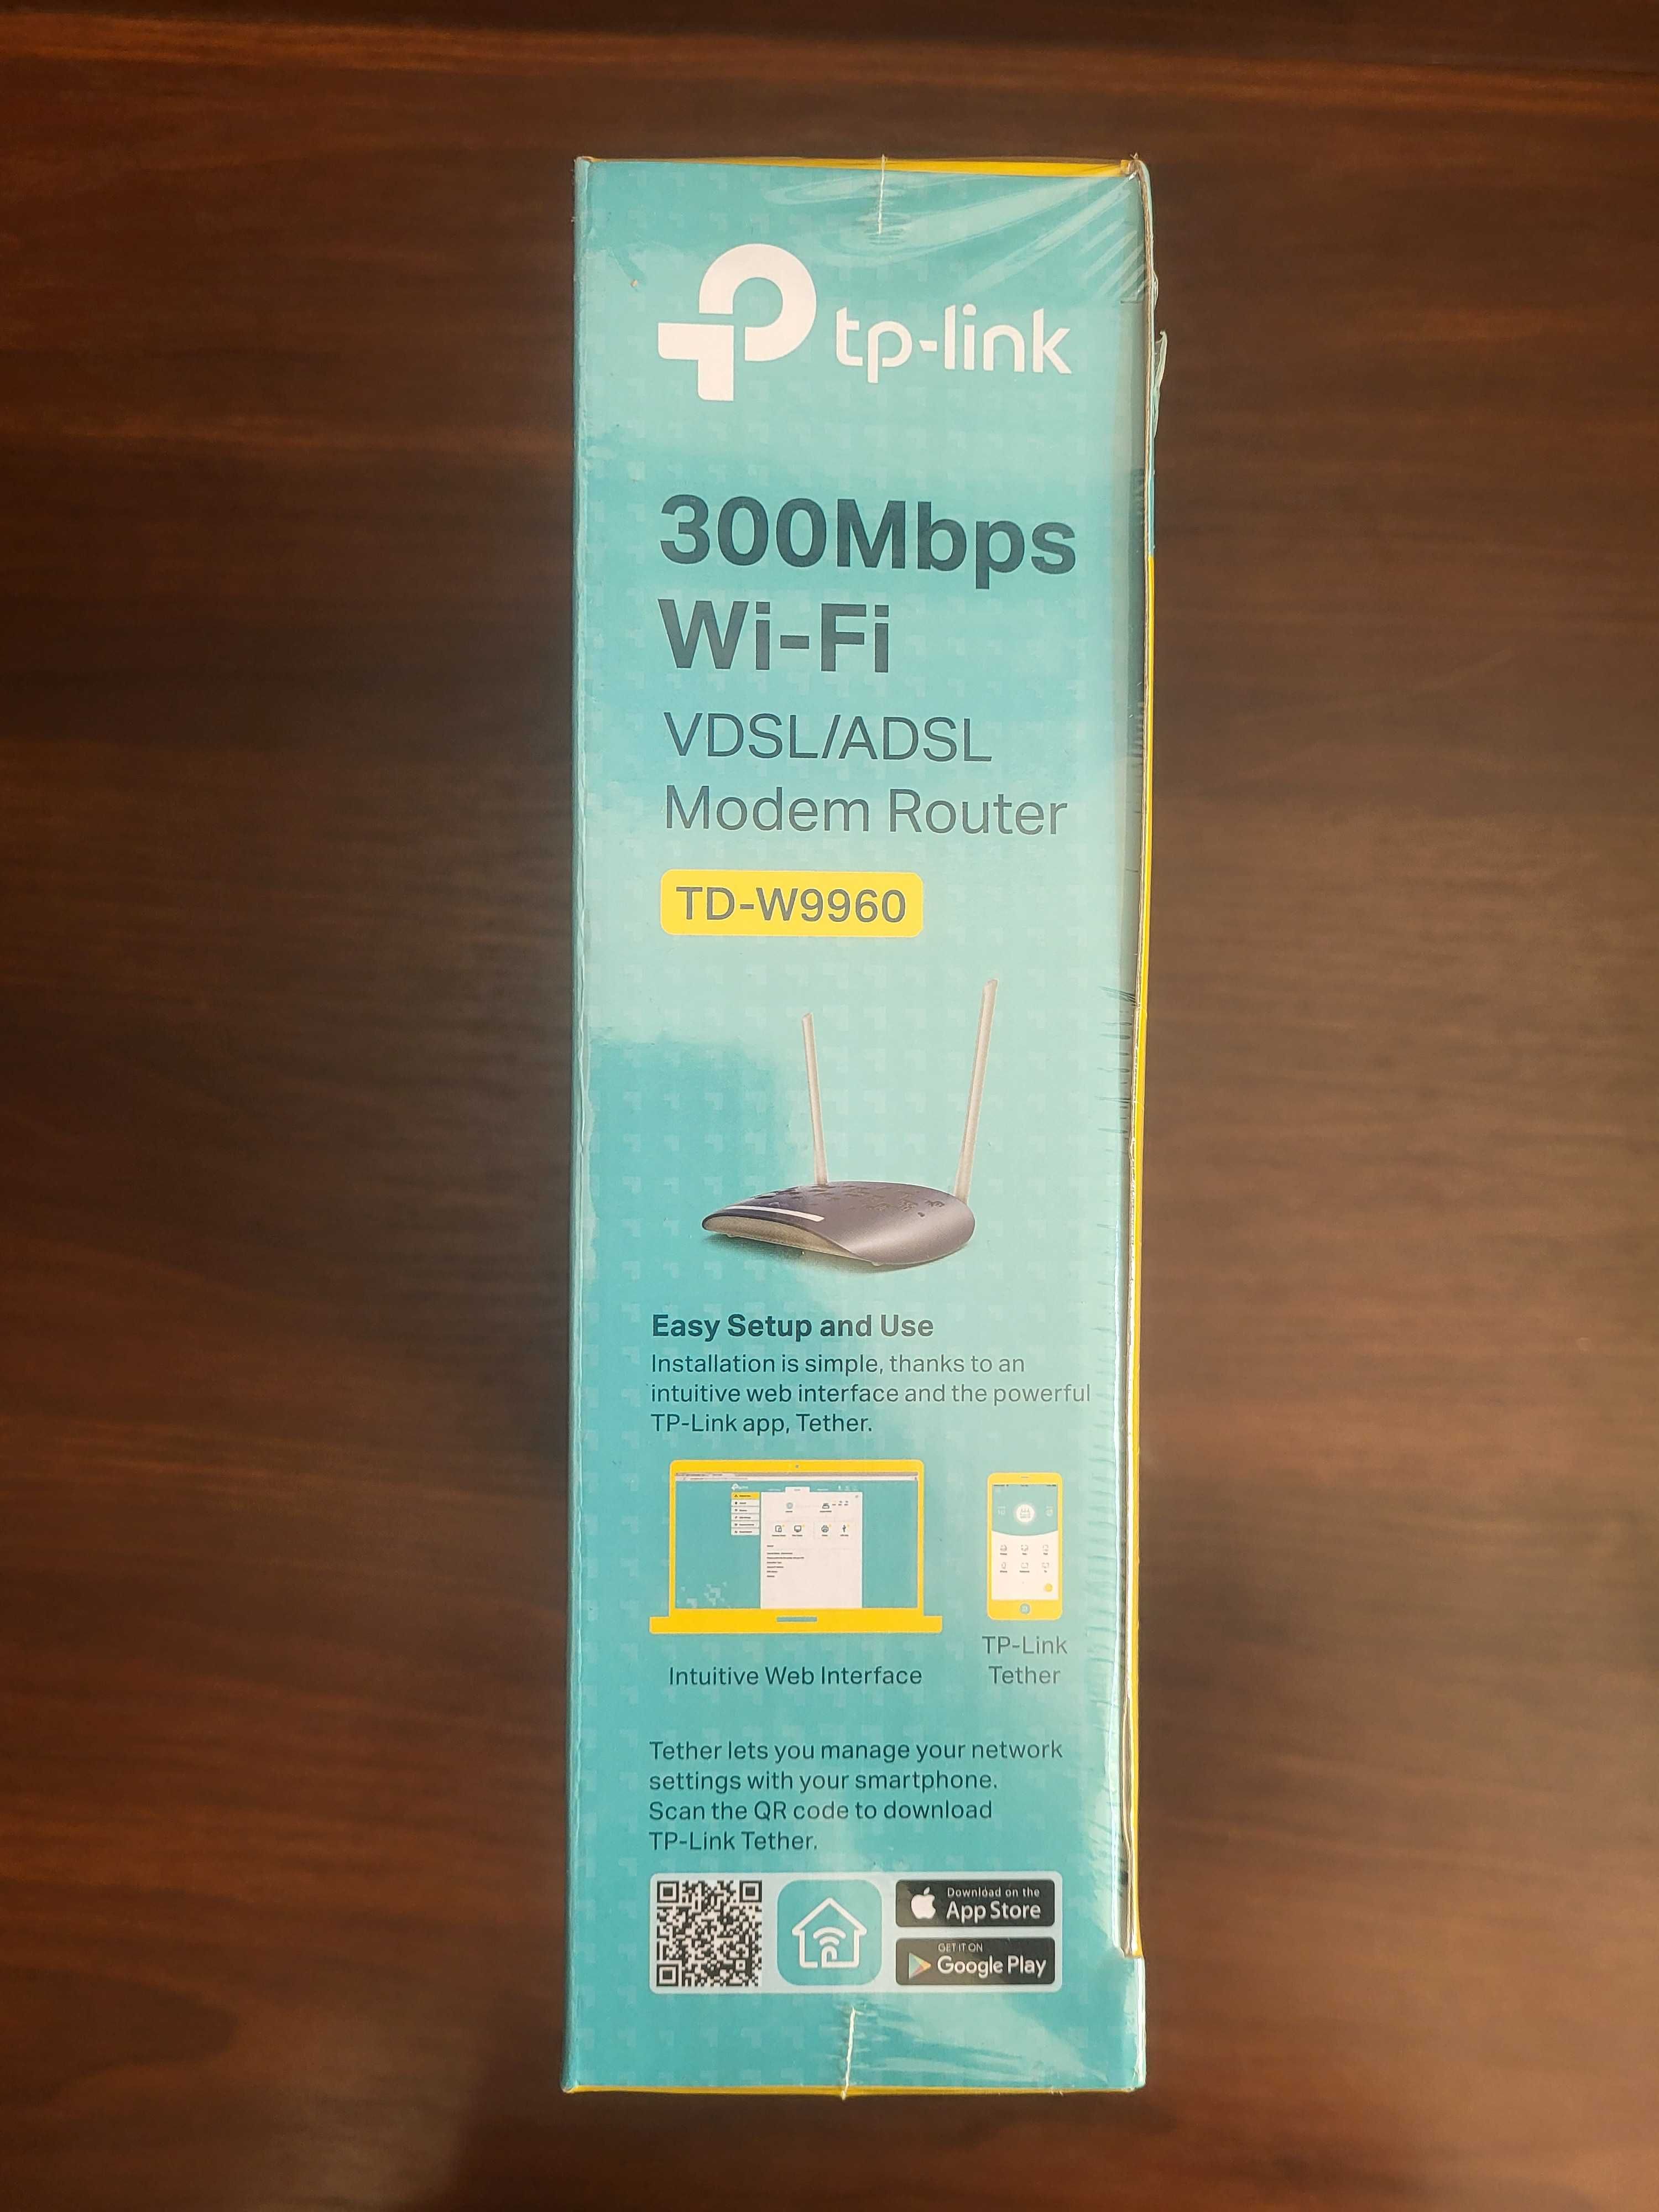 Bezprzewodowy router/modem VDSL/ADSL standard N TP-Link TD-W9960